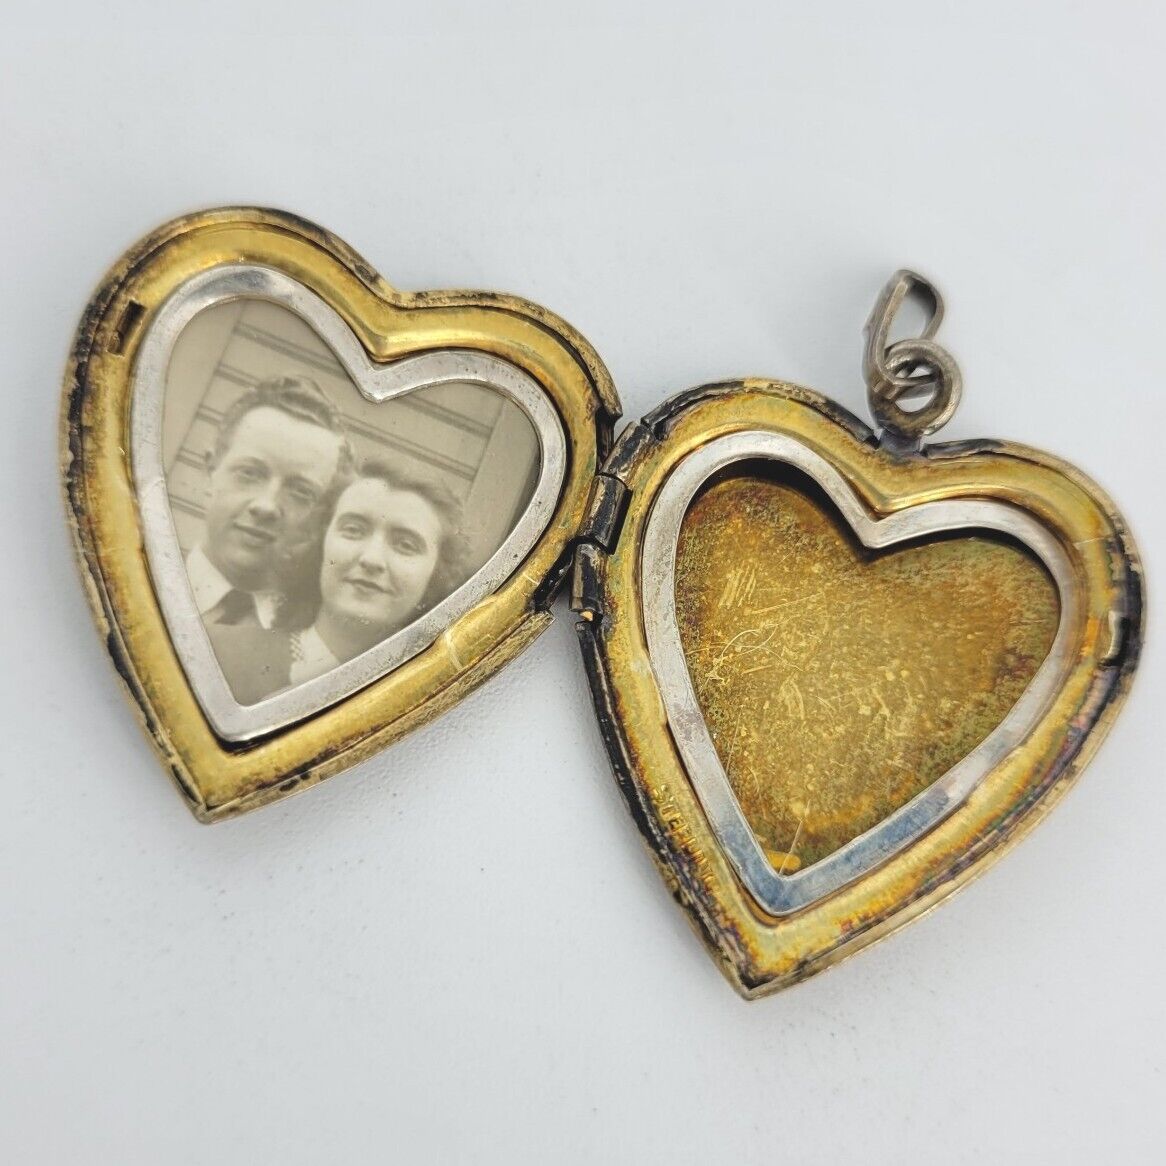 WWII Era Heart Locket with Couple Photo